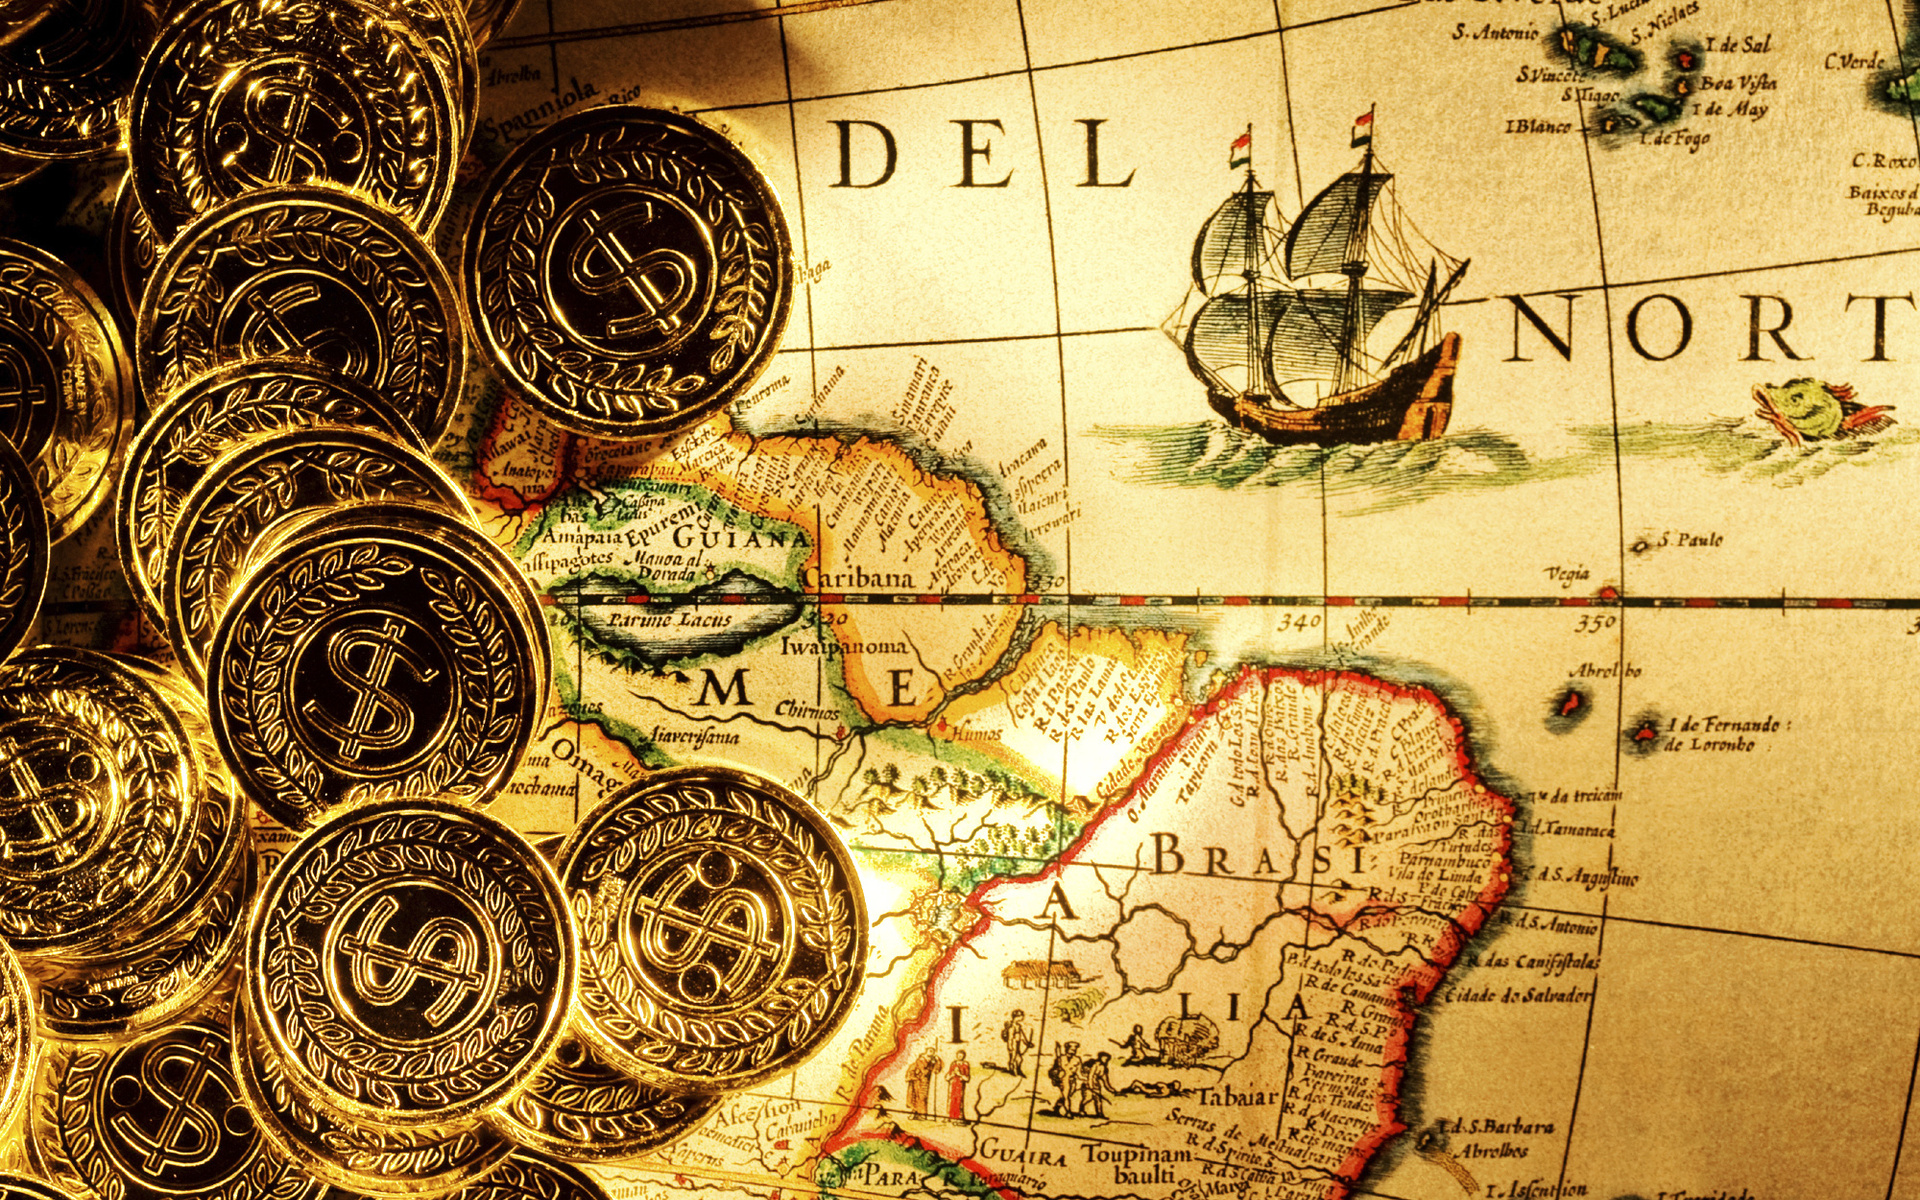 bullion, Gold, Coins, Money, Dollars, Ingots, Fantasy, Pirate, Maps, Ships, Detail, Paper, Islands, Land, Ocean, Sea, Sail, Direction, Shine, World, Color, Degrees Wallpaper